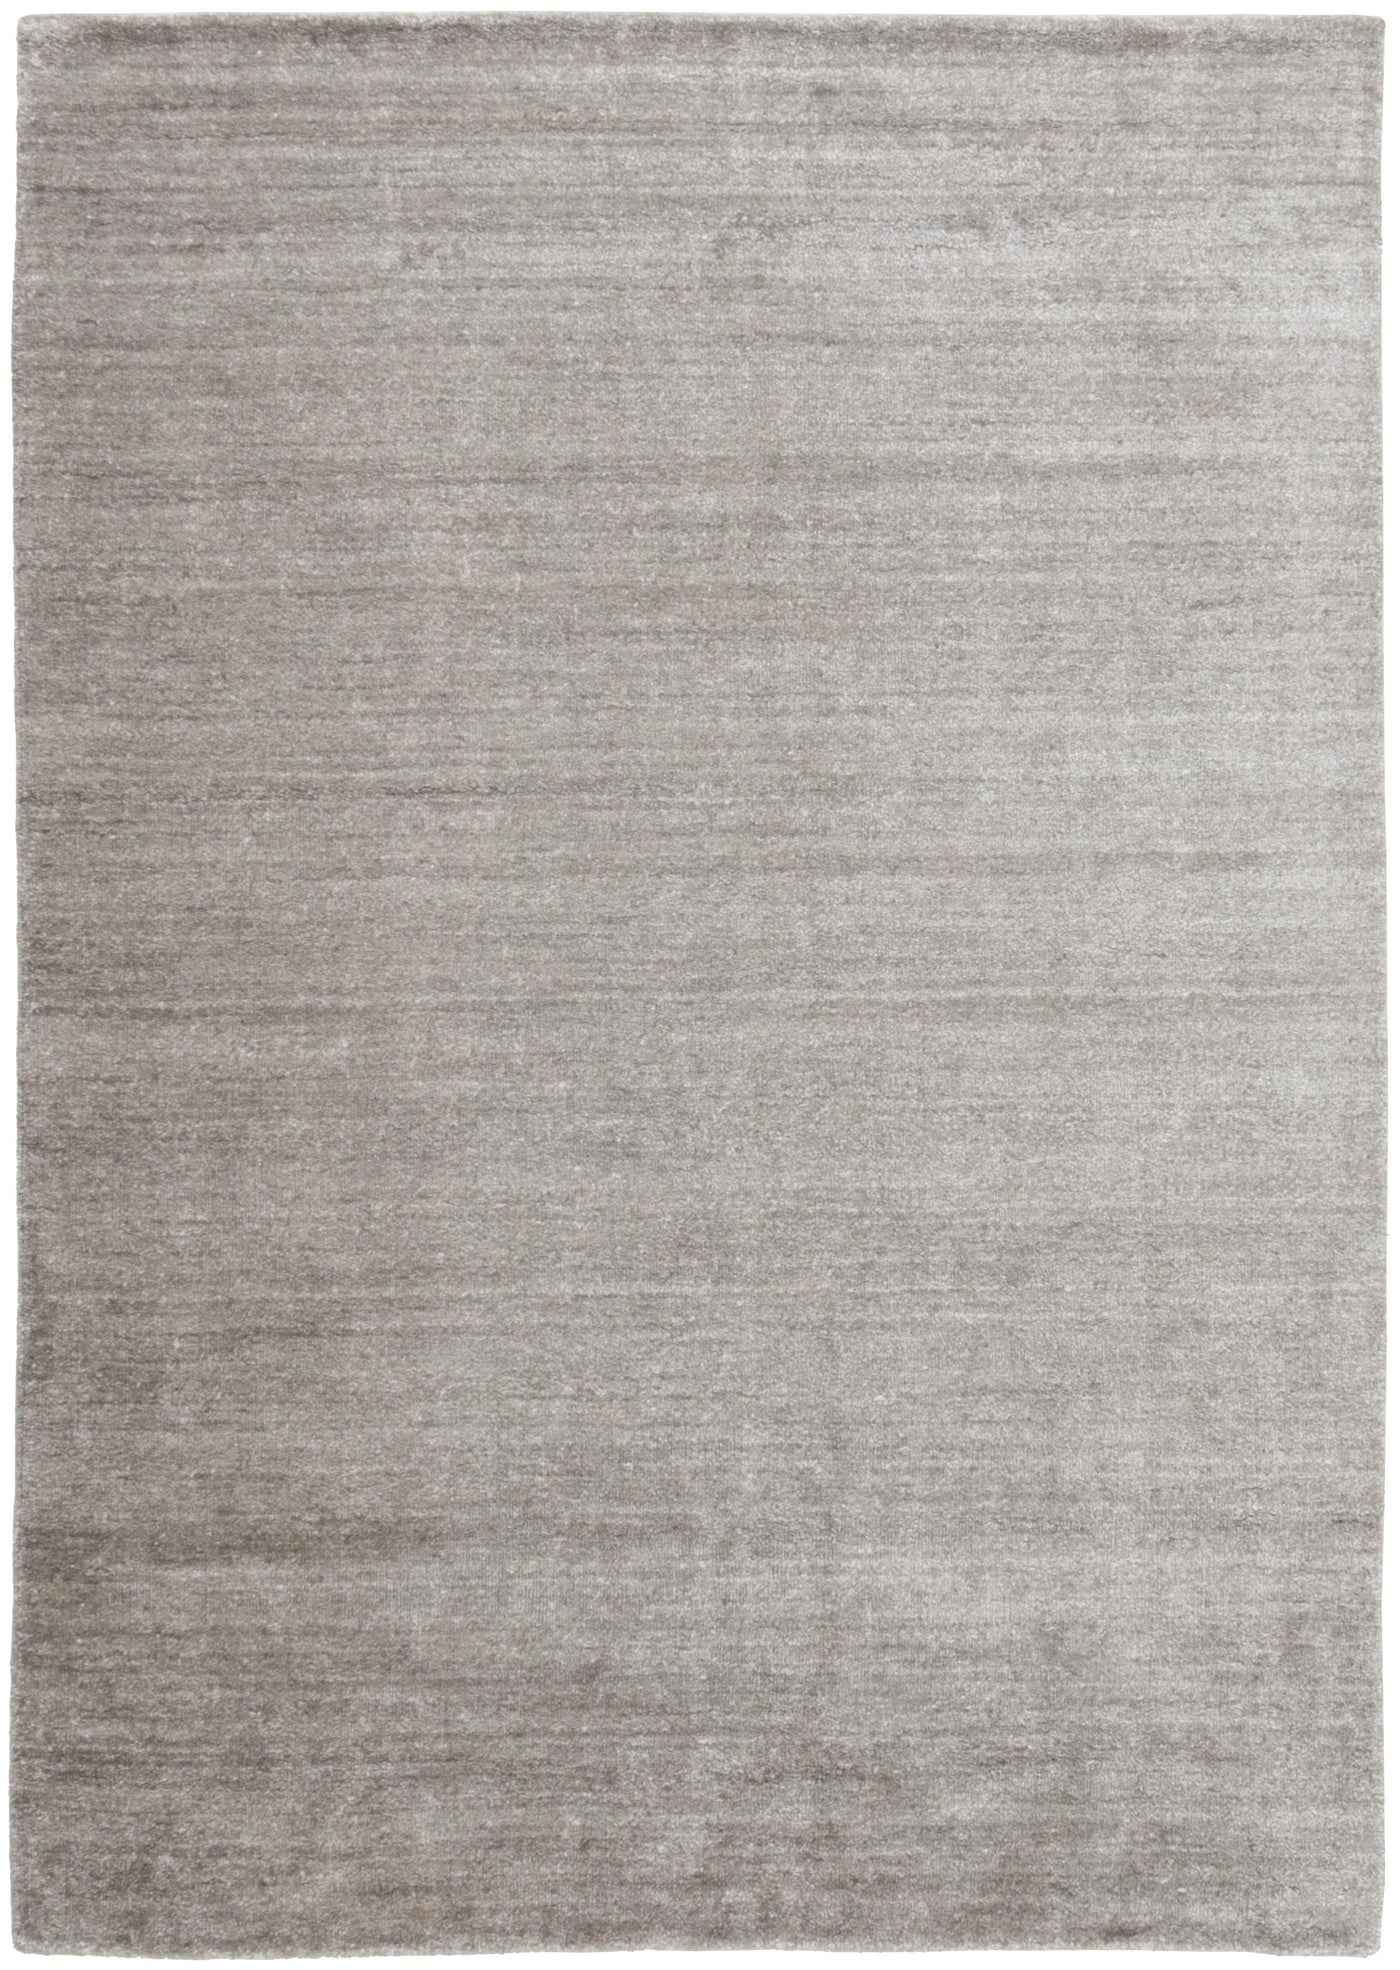 Dusty Plains Teppich - Grey - Handgewebt